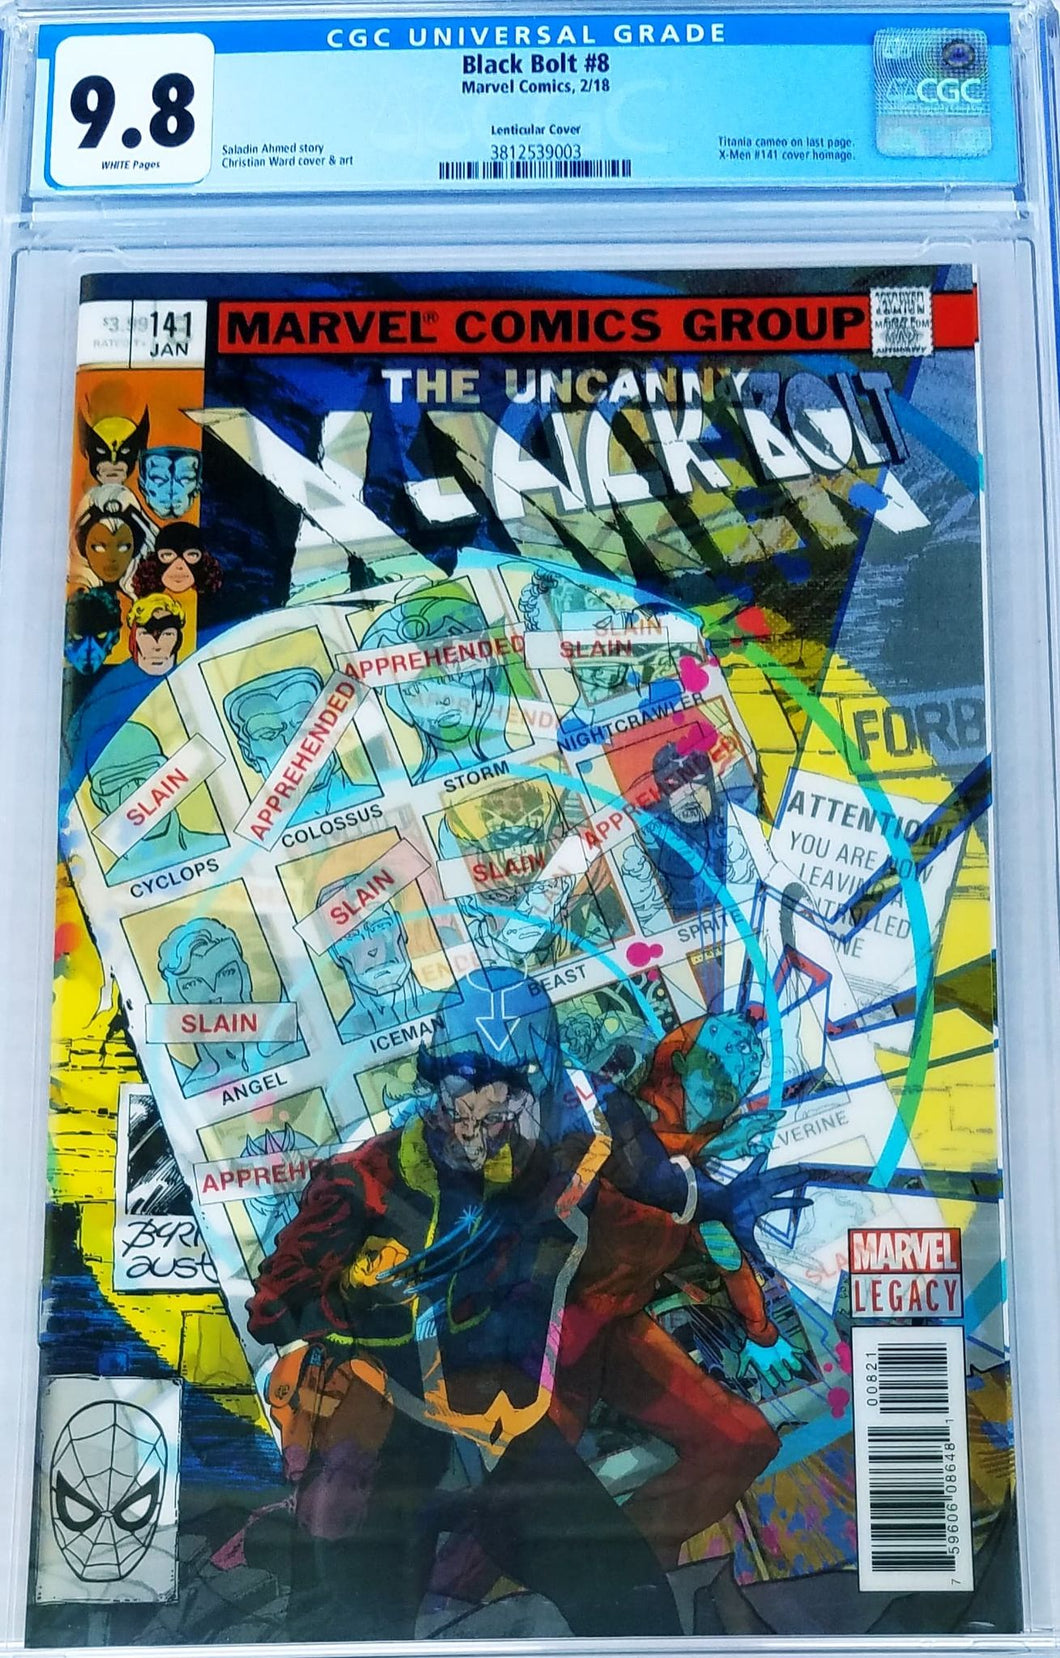 Black Bolt #8 CGC 9.8 - Uncany X-Men 141 homage lenticular variant (Marvel Comics, 2018)